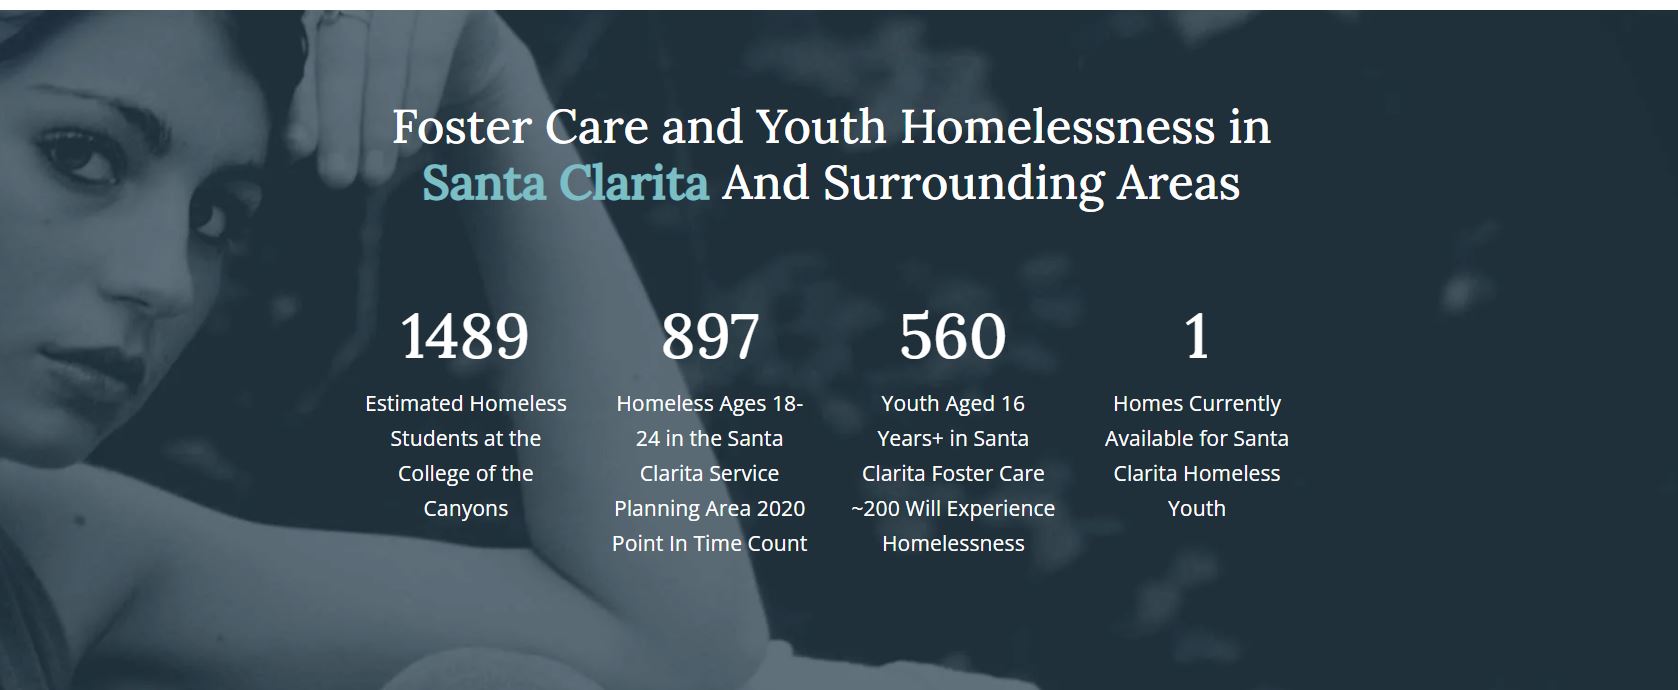 santa clarita statistics for housing